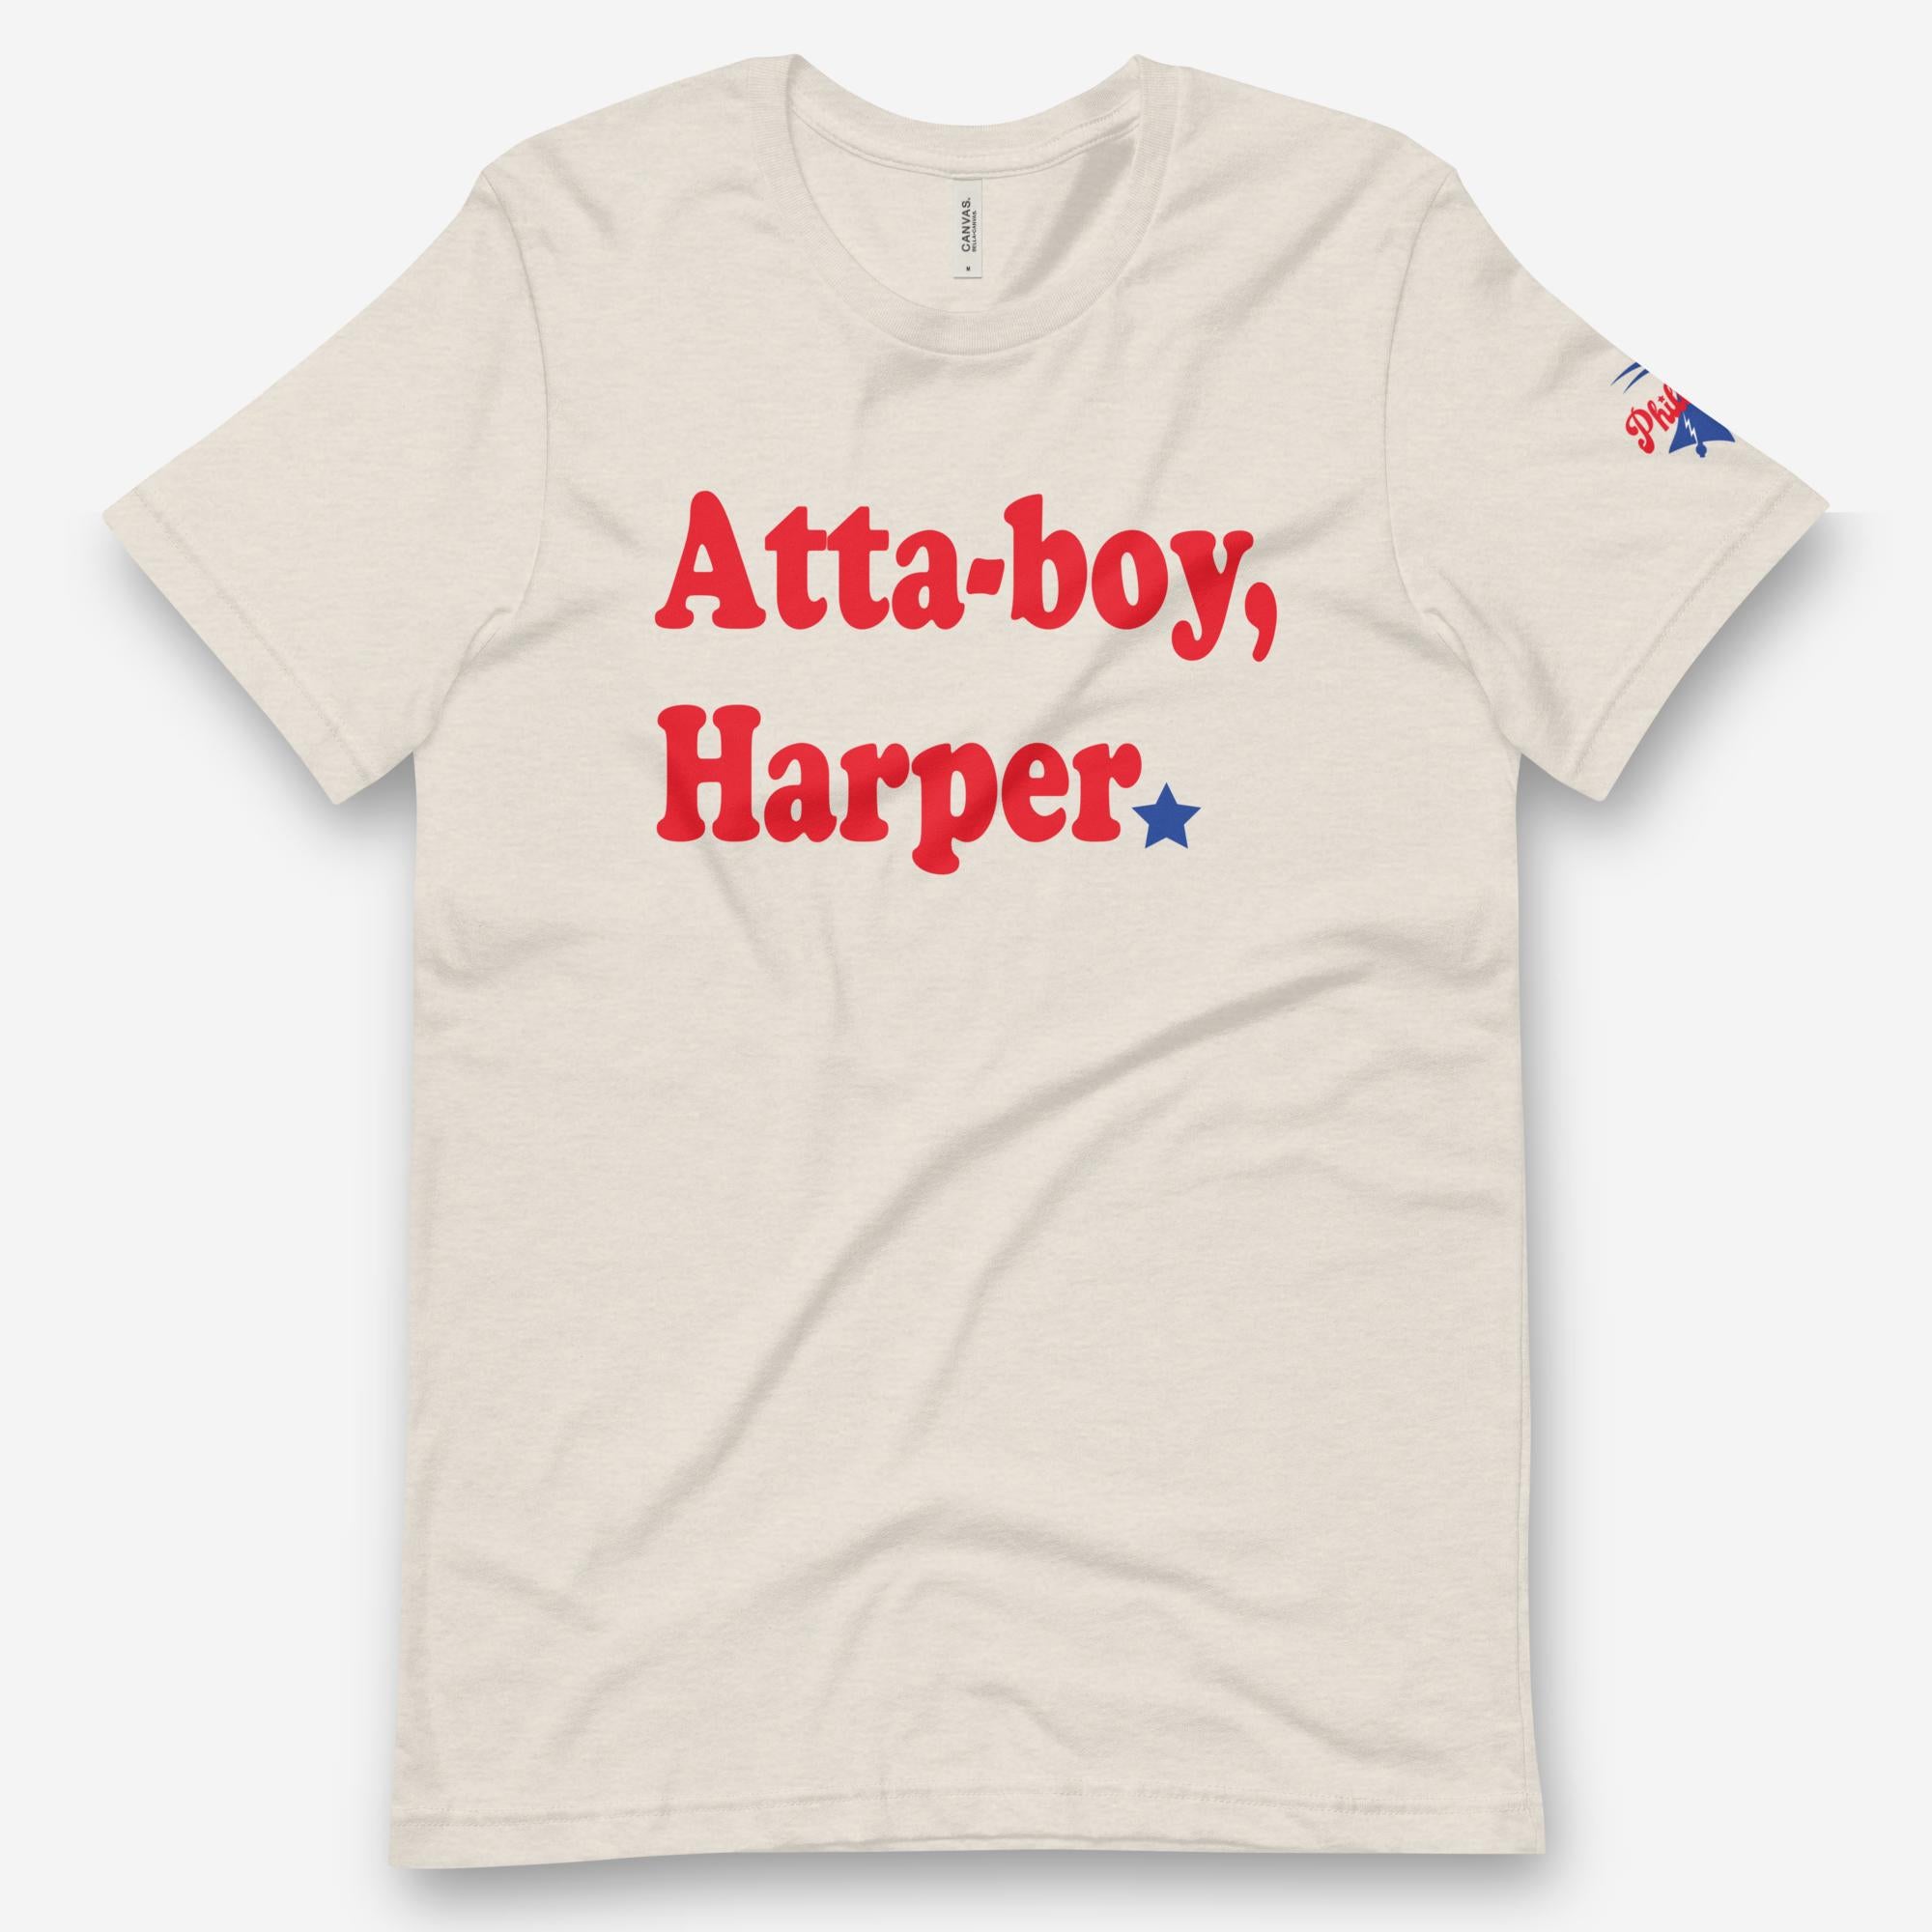 Atta boy, Harper! Philadelphia Phillies fans need these shirts from  BreakingT